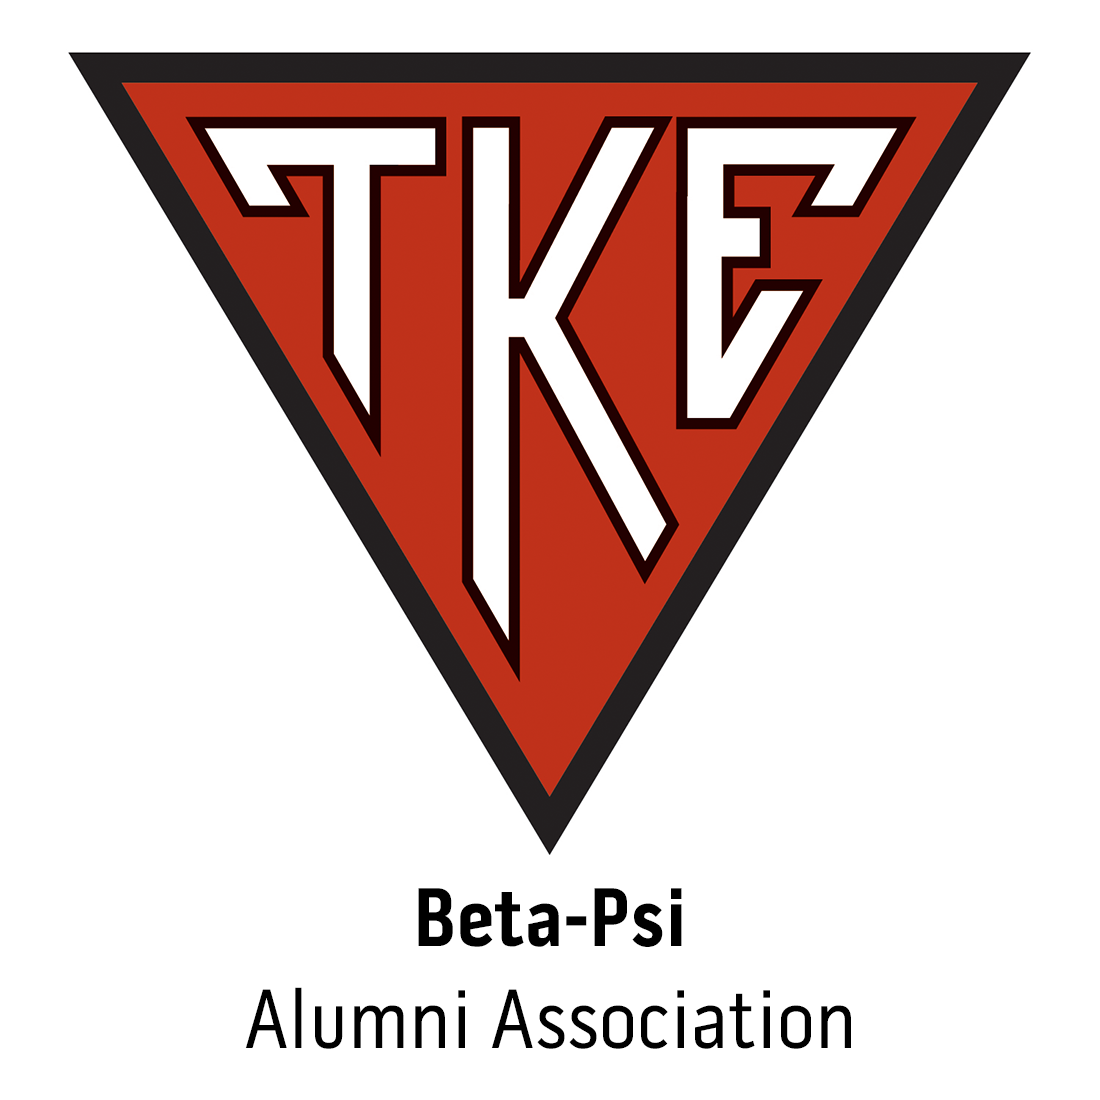 Beta-Psi Alumni Association at Arkansas State University